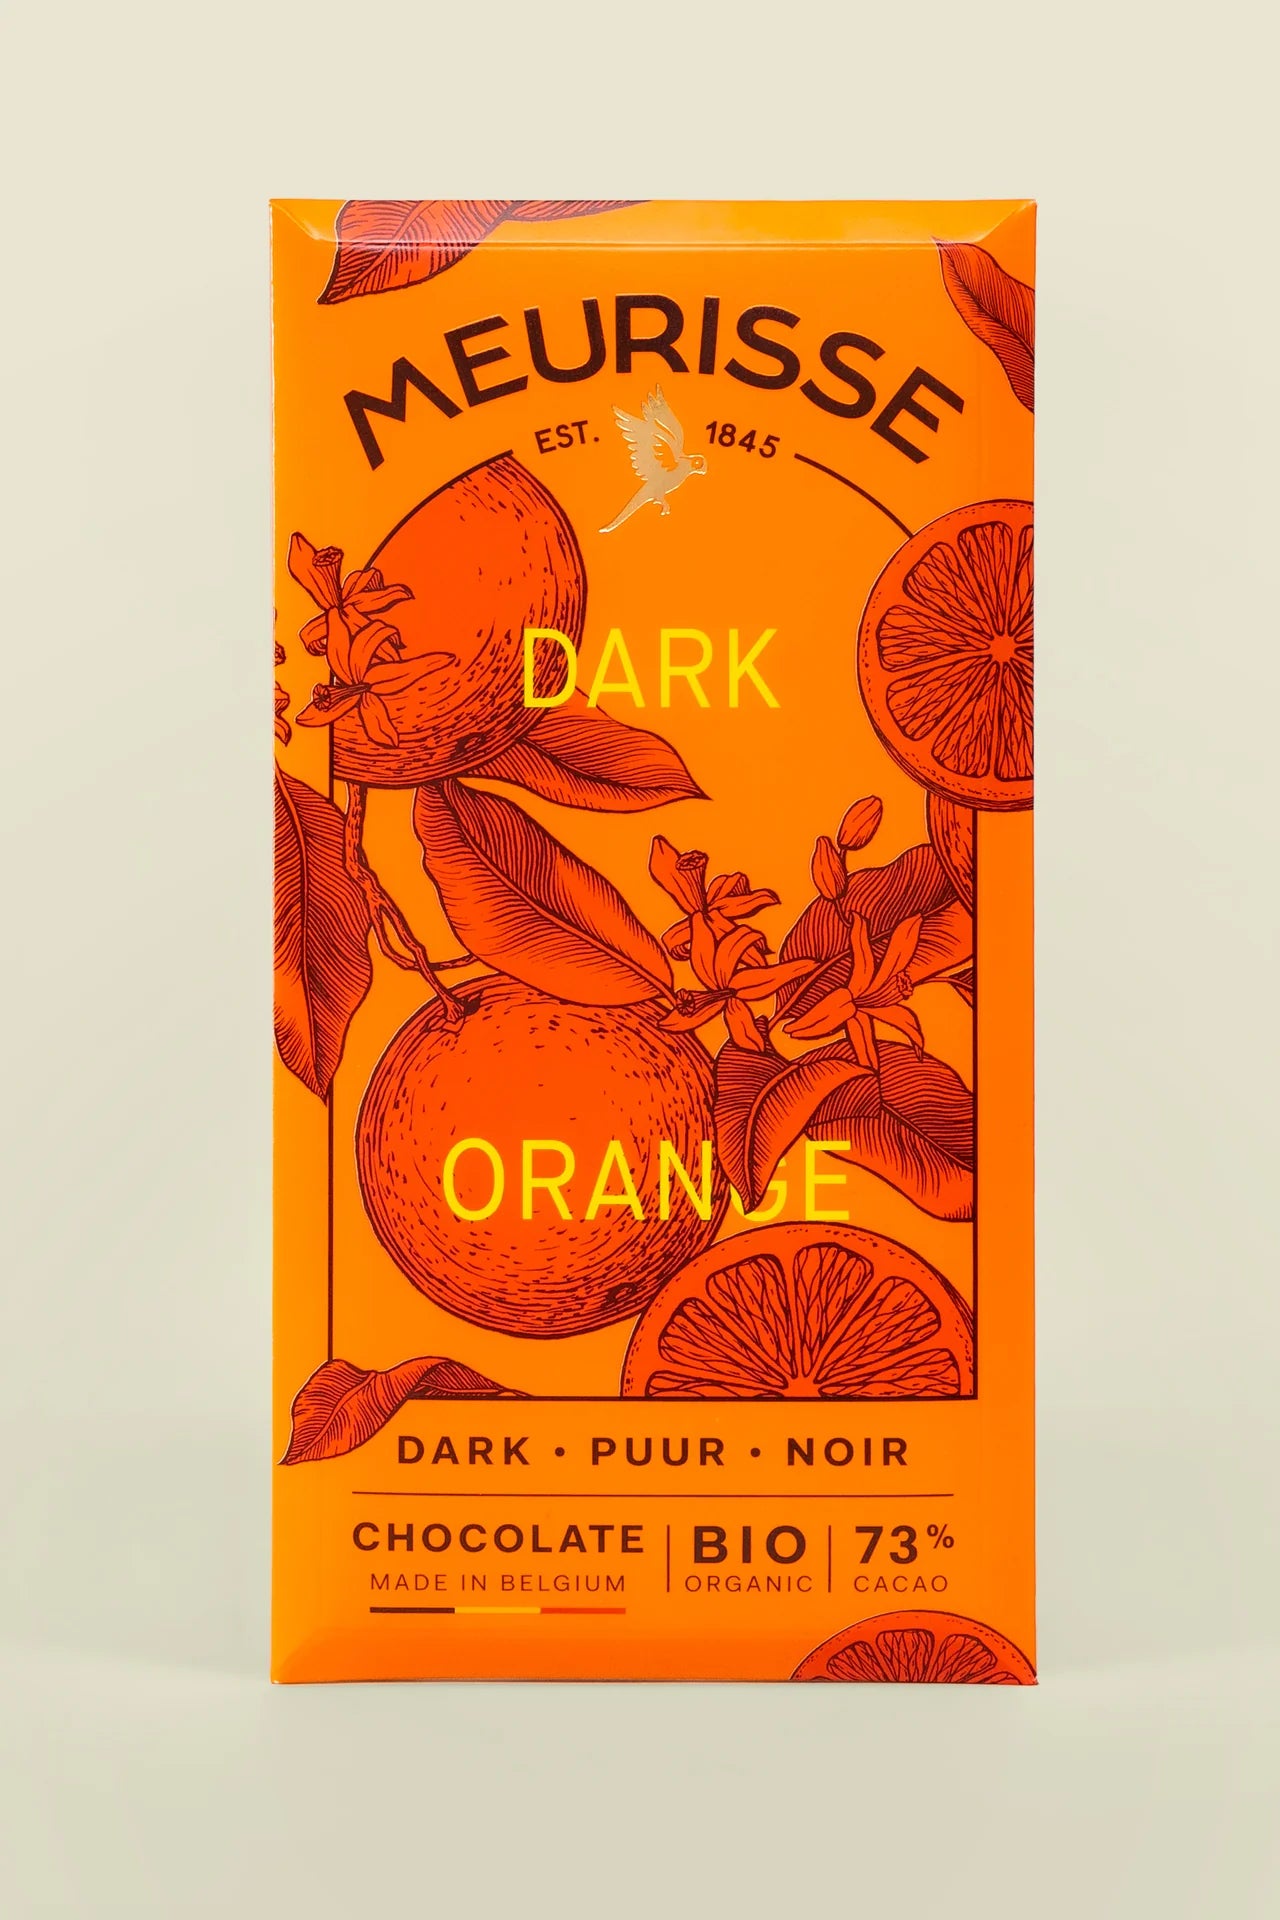 Dark chocolate with Orange (MEURISSE) 70g